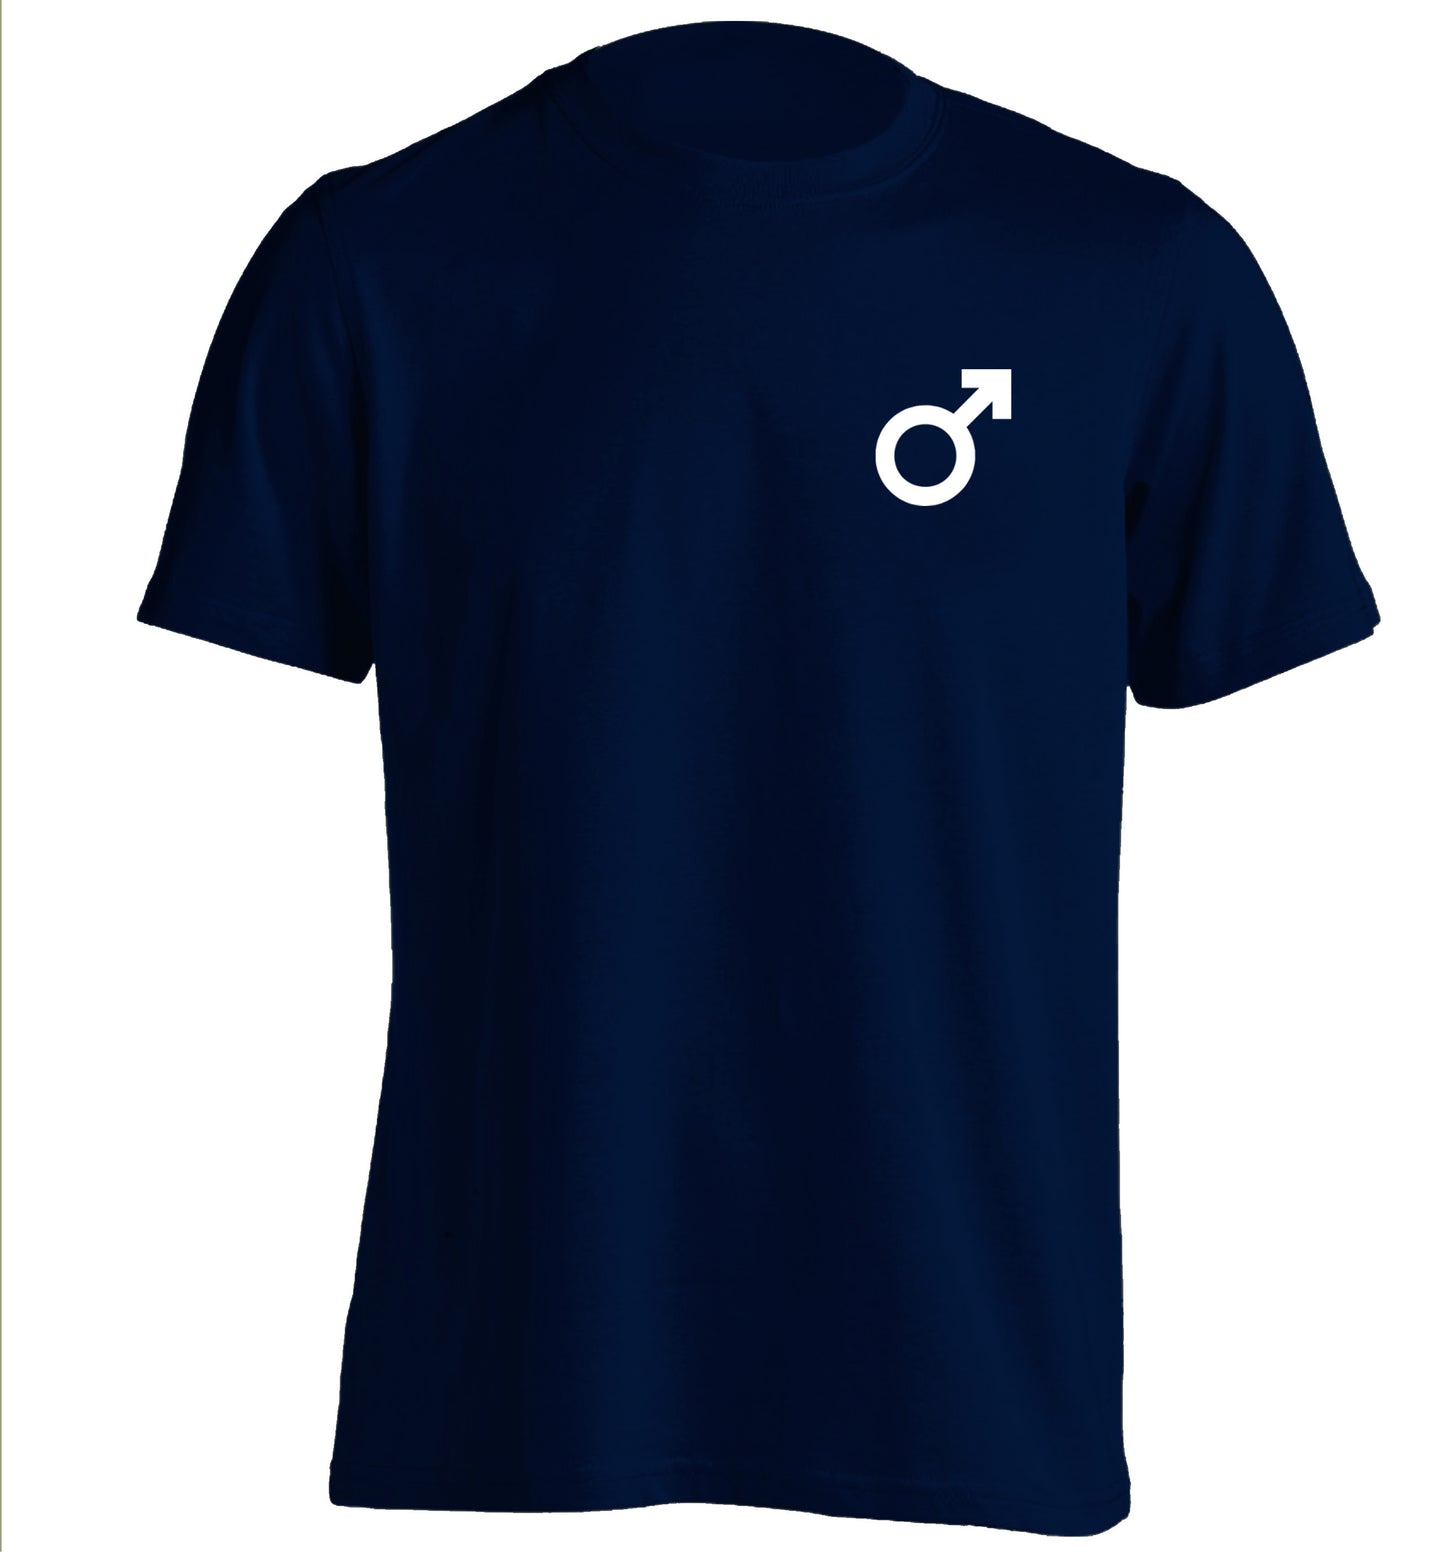 Male symbol pocket adults unisex navy Tshirt 2XL